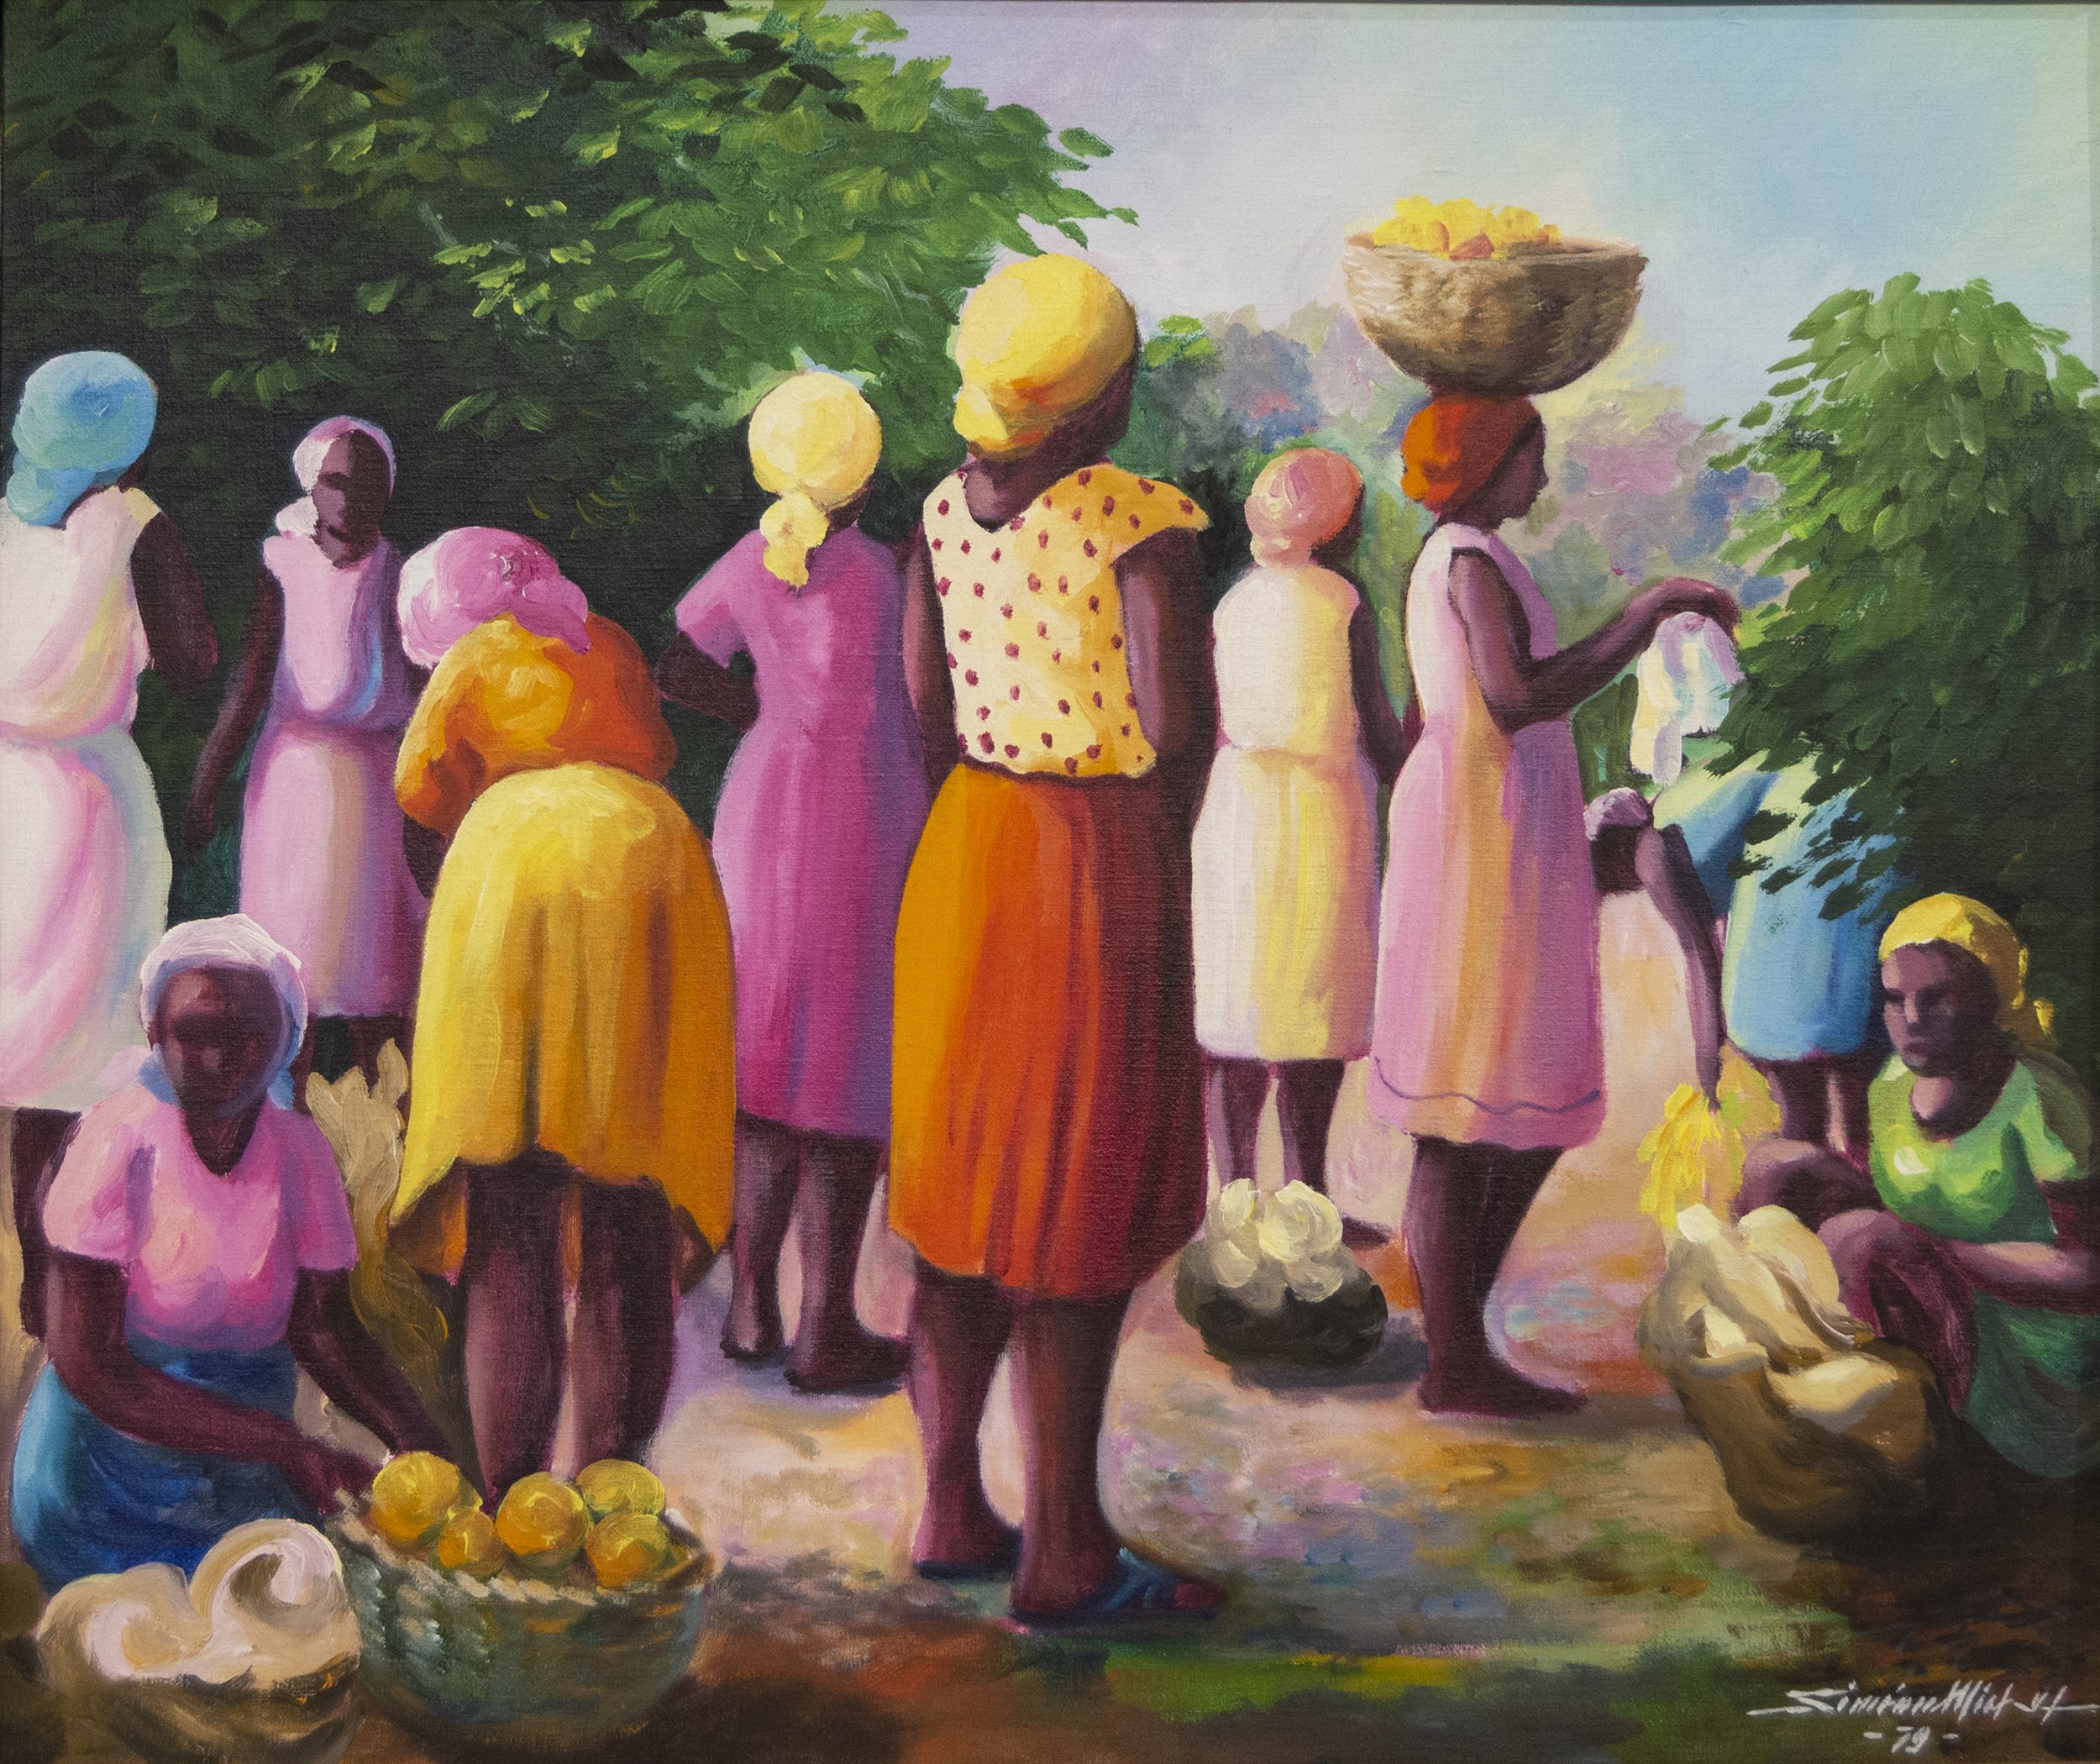 Simeon Michel, untitled [market scene with female figures], 1979